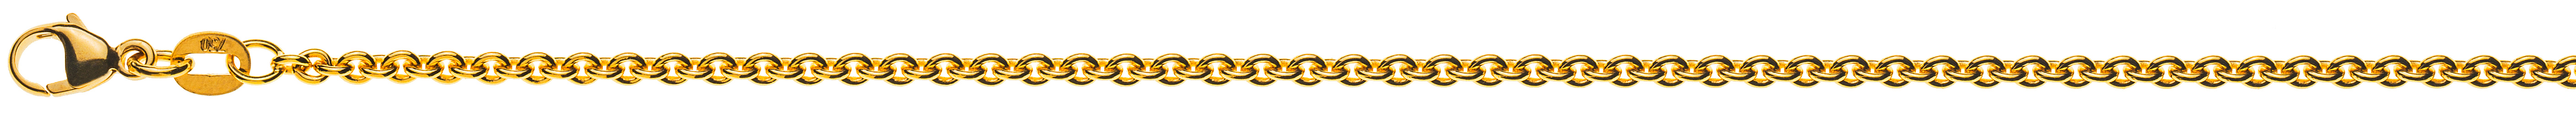 AURONOS Prestige Necklace Yellow Gold 18K Round Anchor 55cm 2.3mm